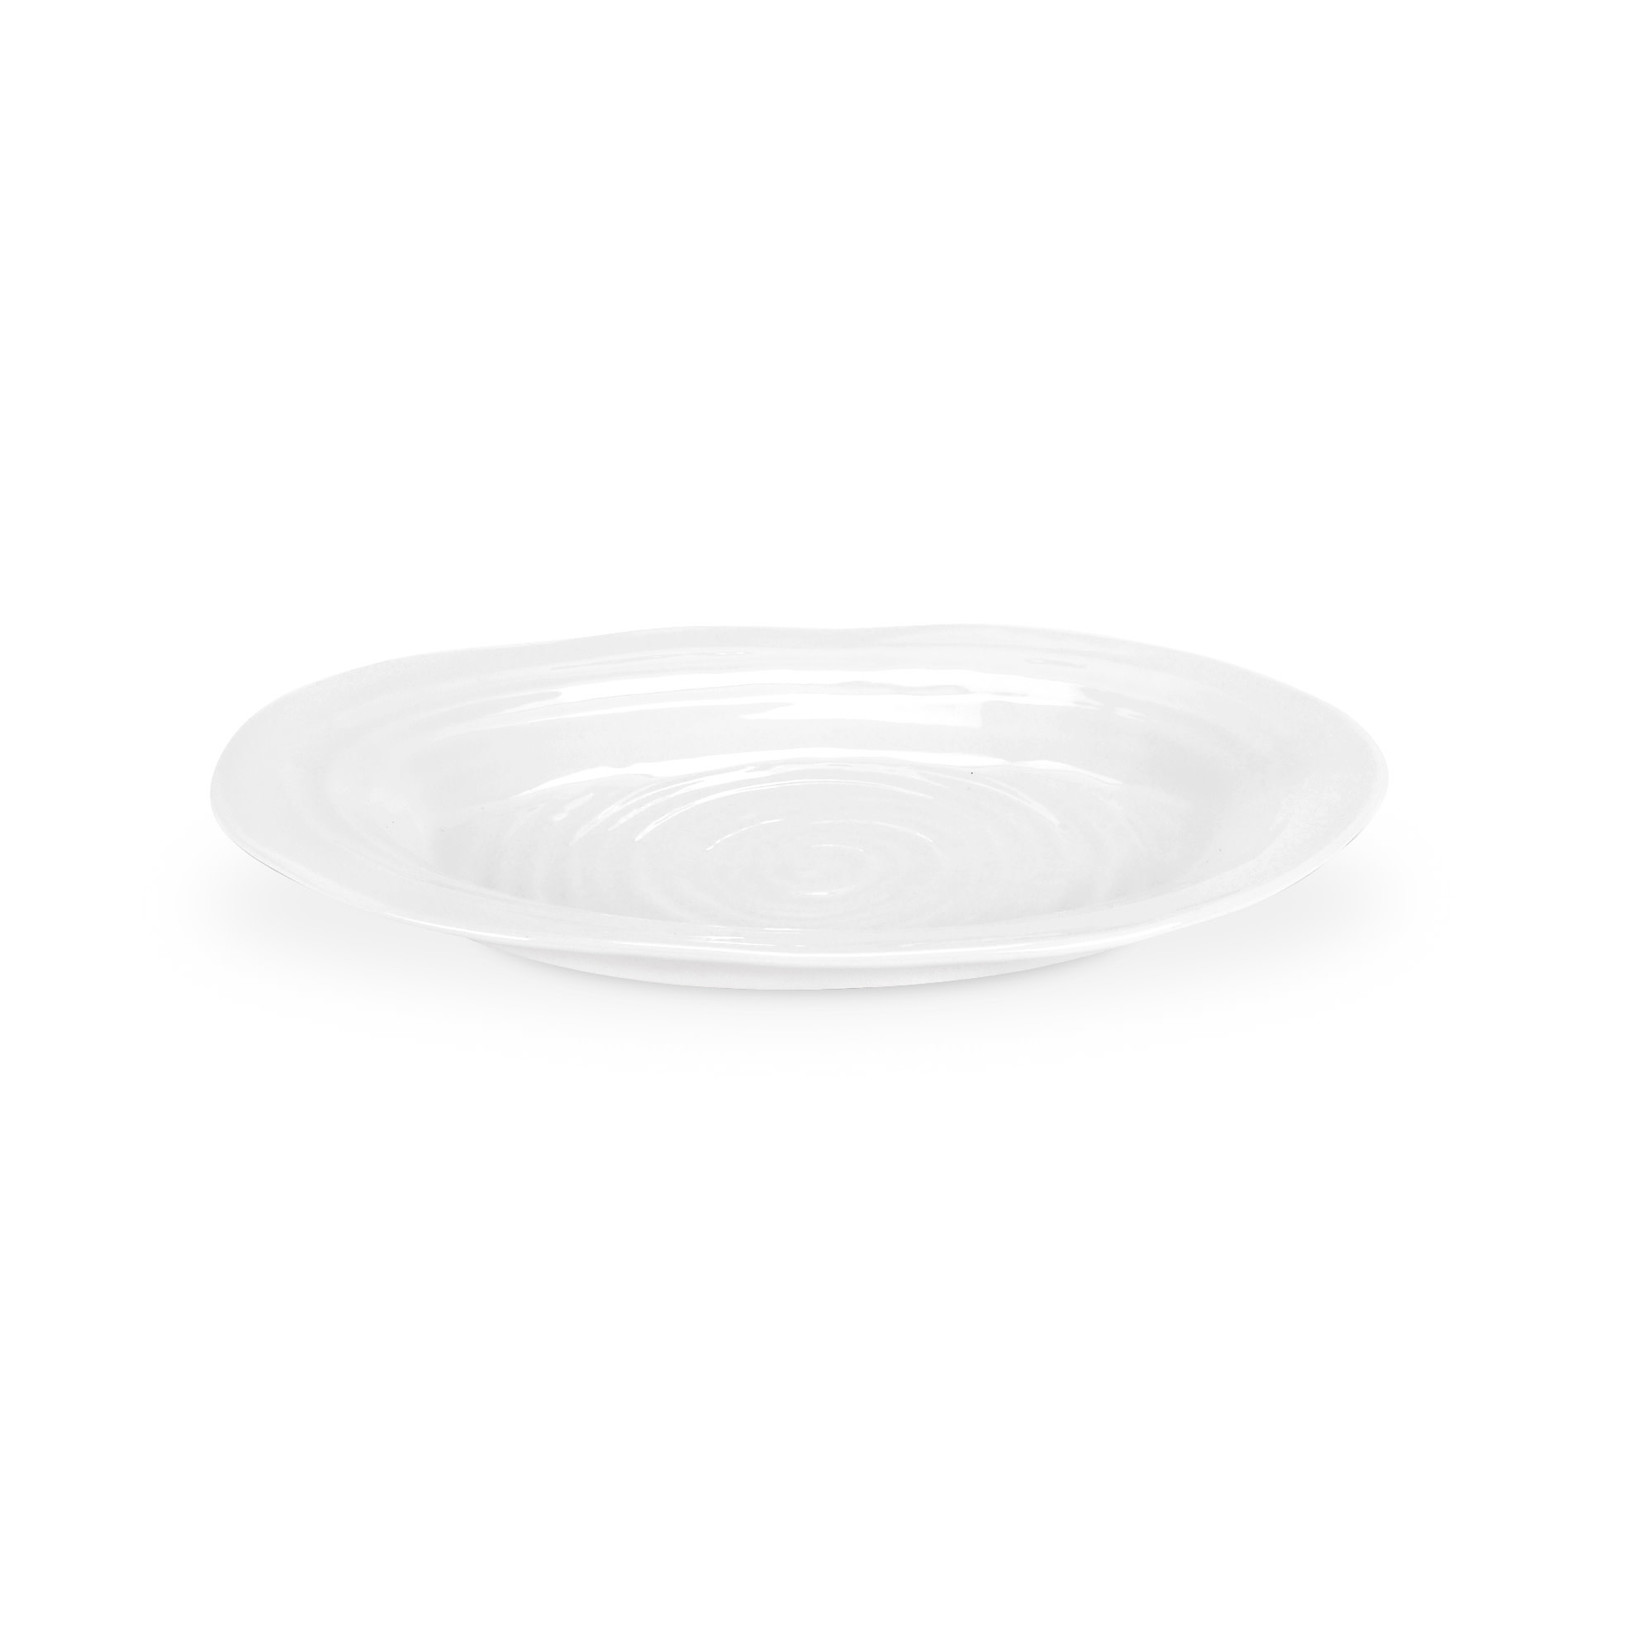 SOPHIE CONRAN SOPHIE CONRAN Oval Platter Small 11.5" - White